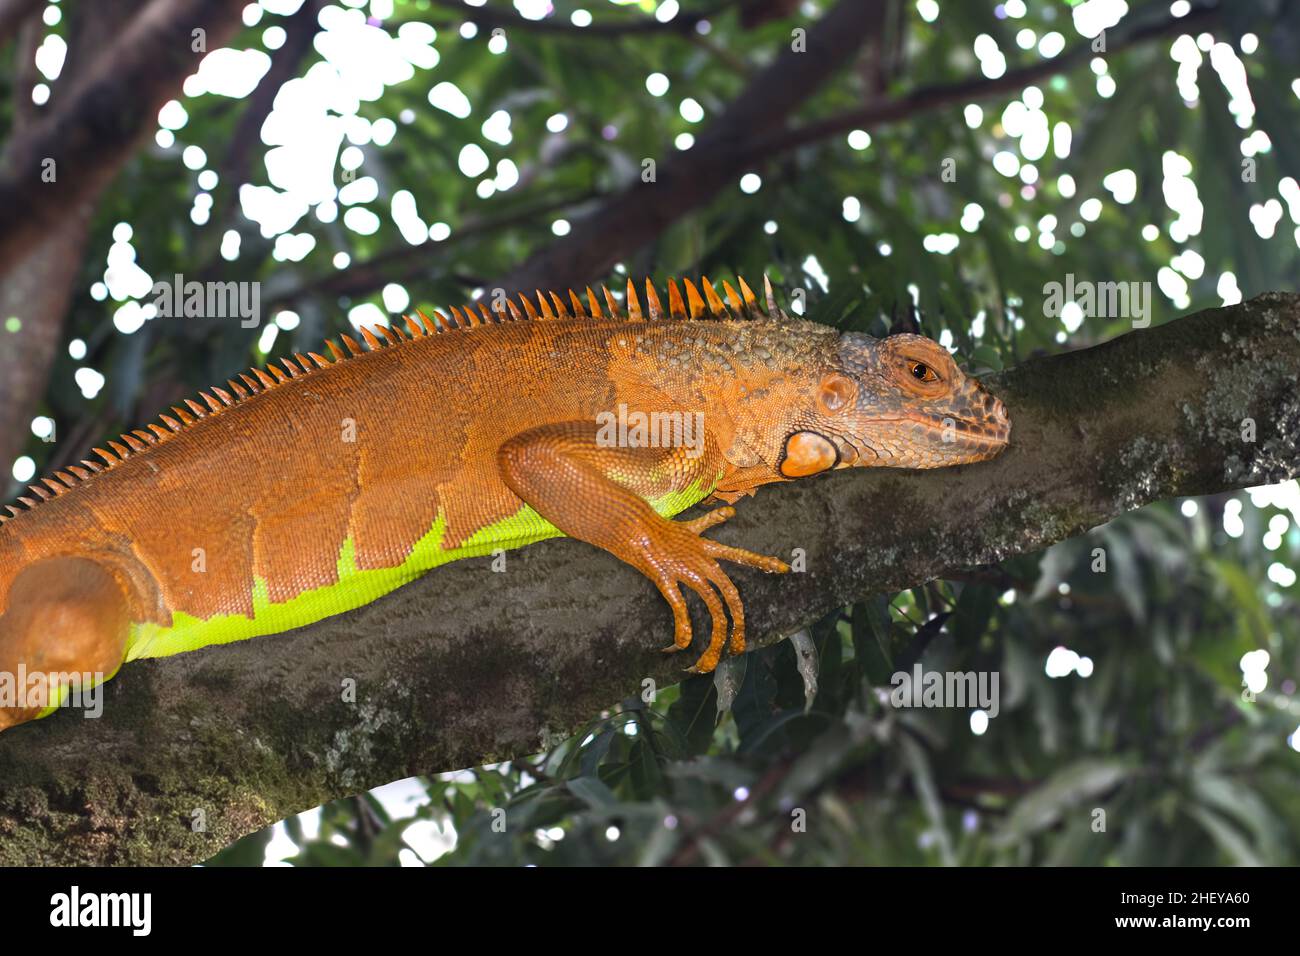 Iguana on the tree branch Stock Photo